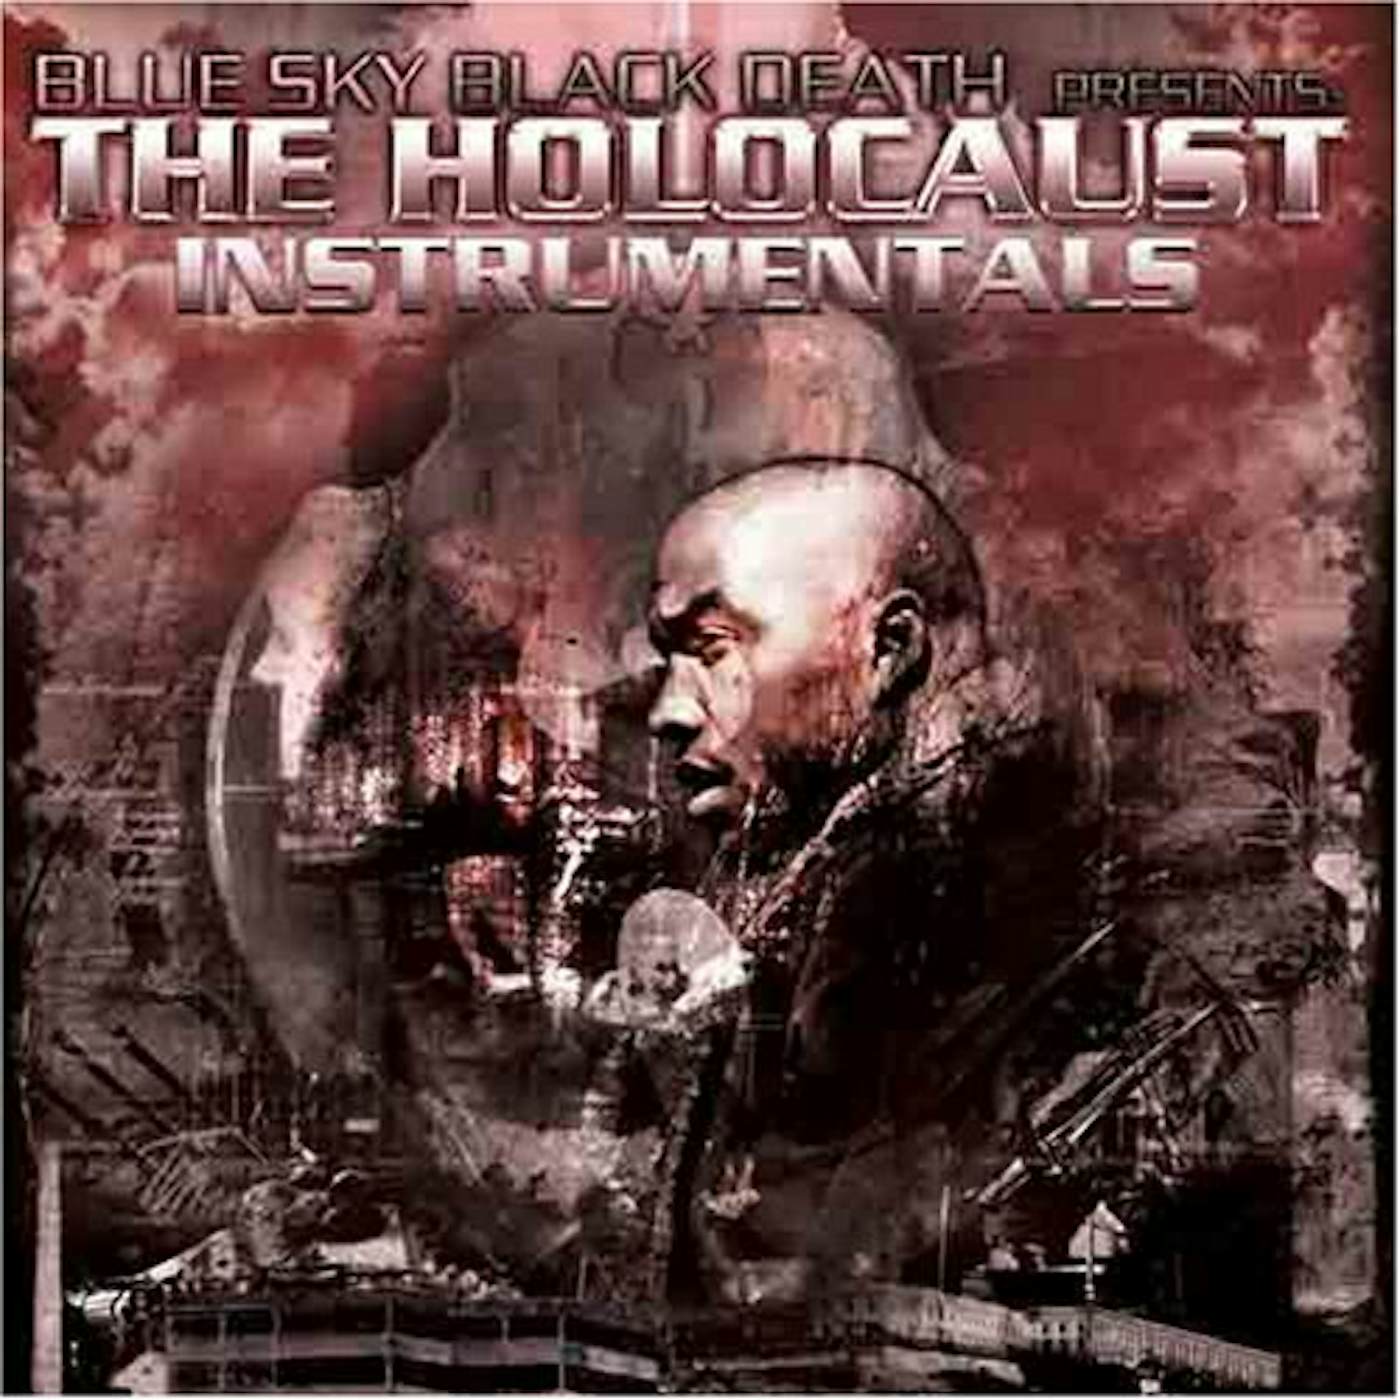 Blue Sky Black Death HOLOCAUST INSTRUMENTALS CD